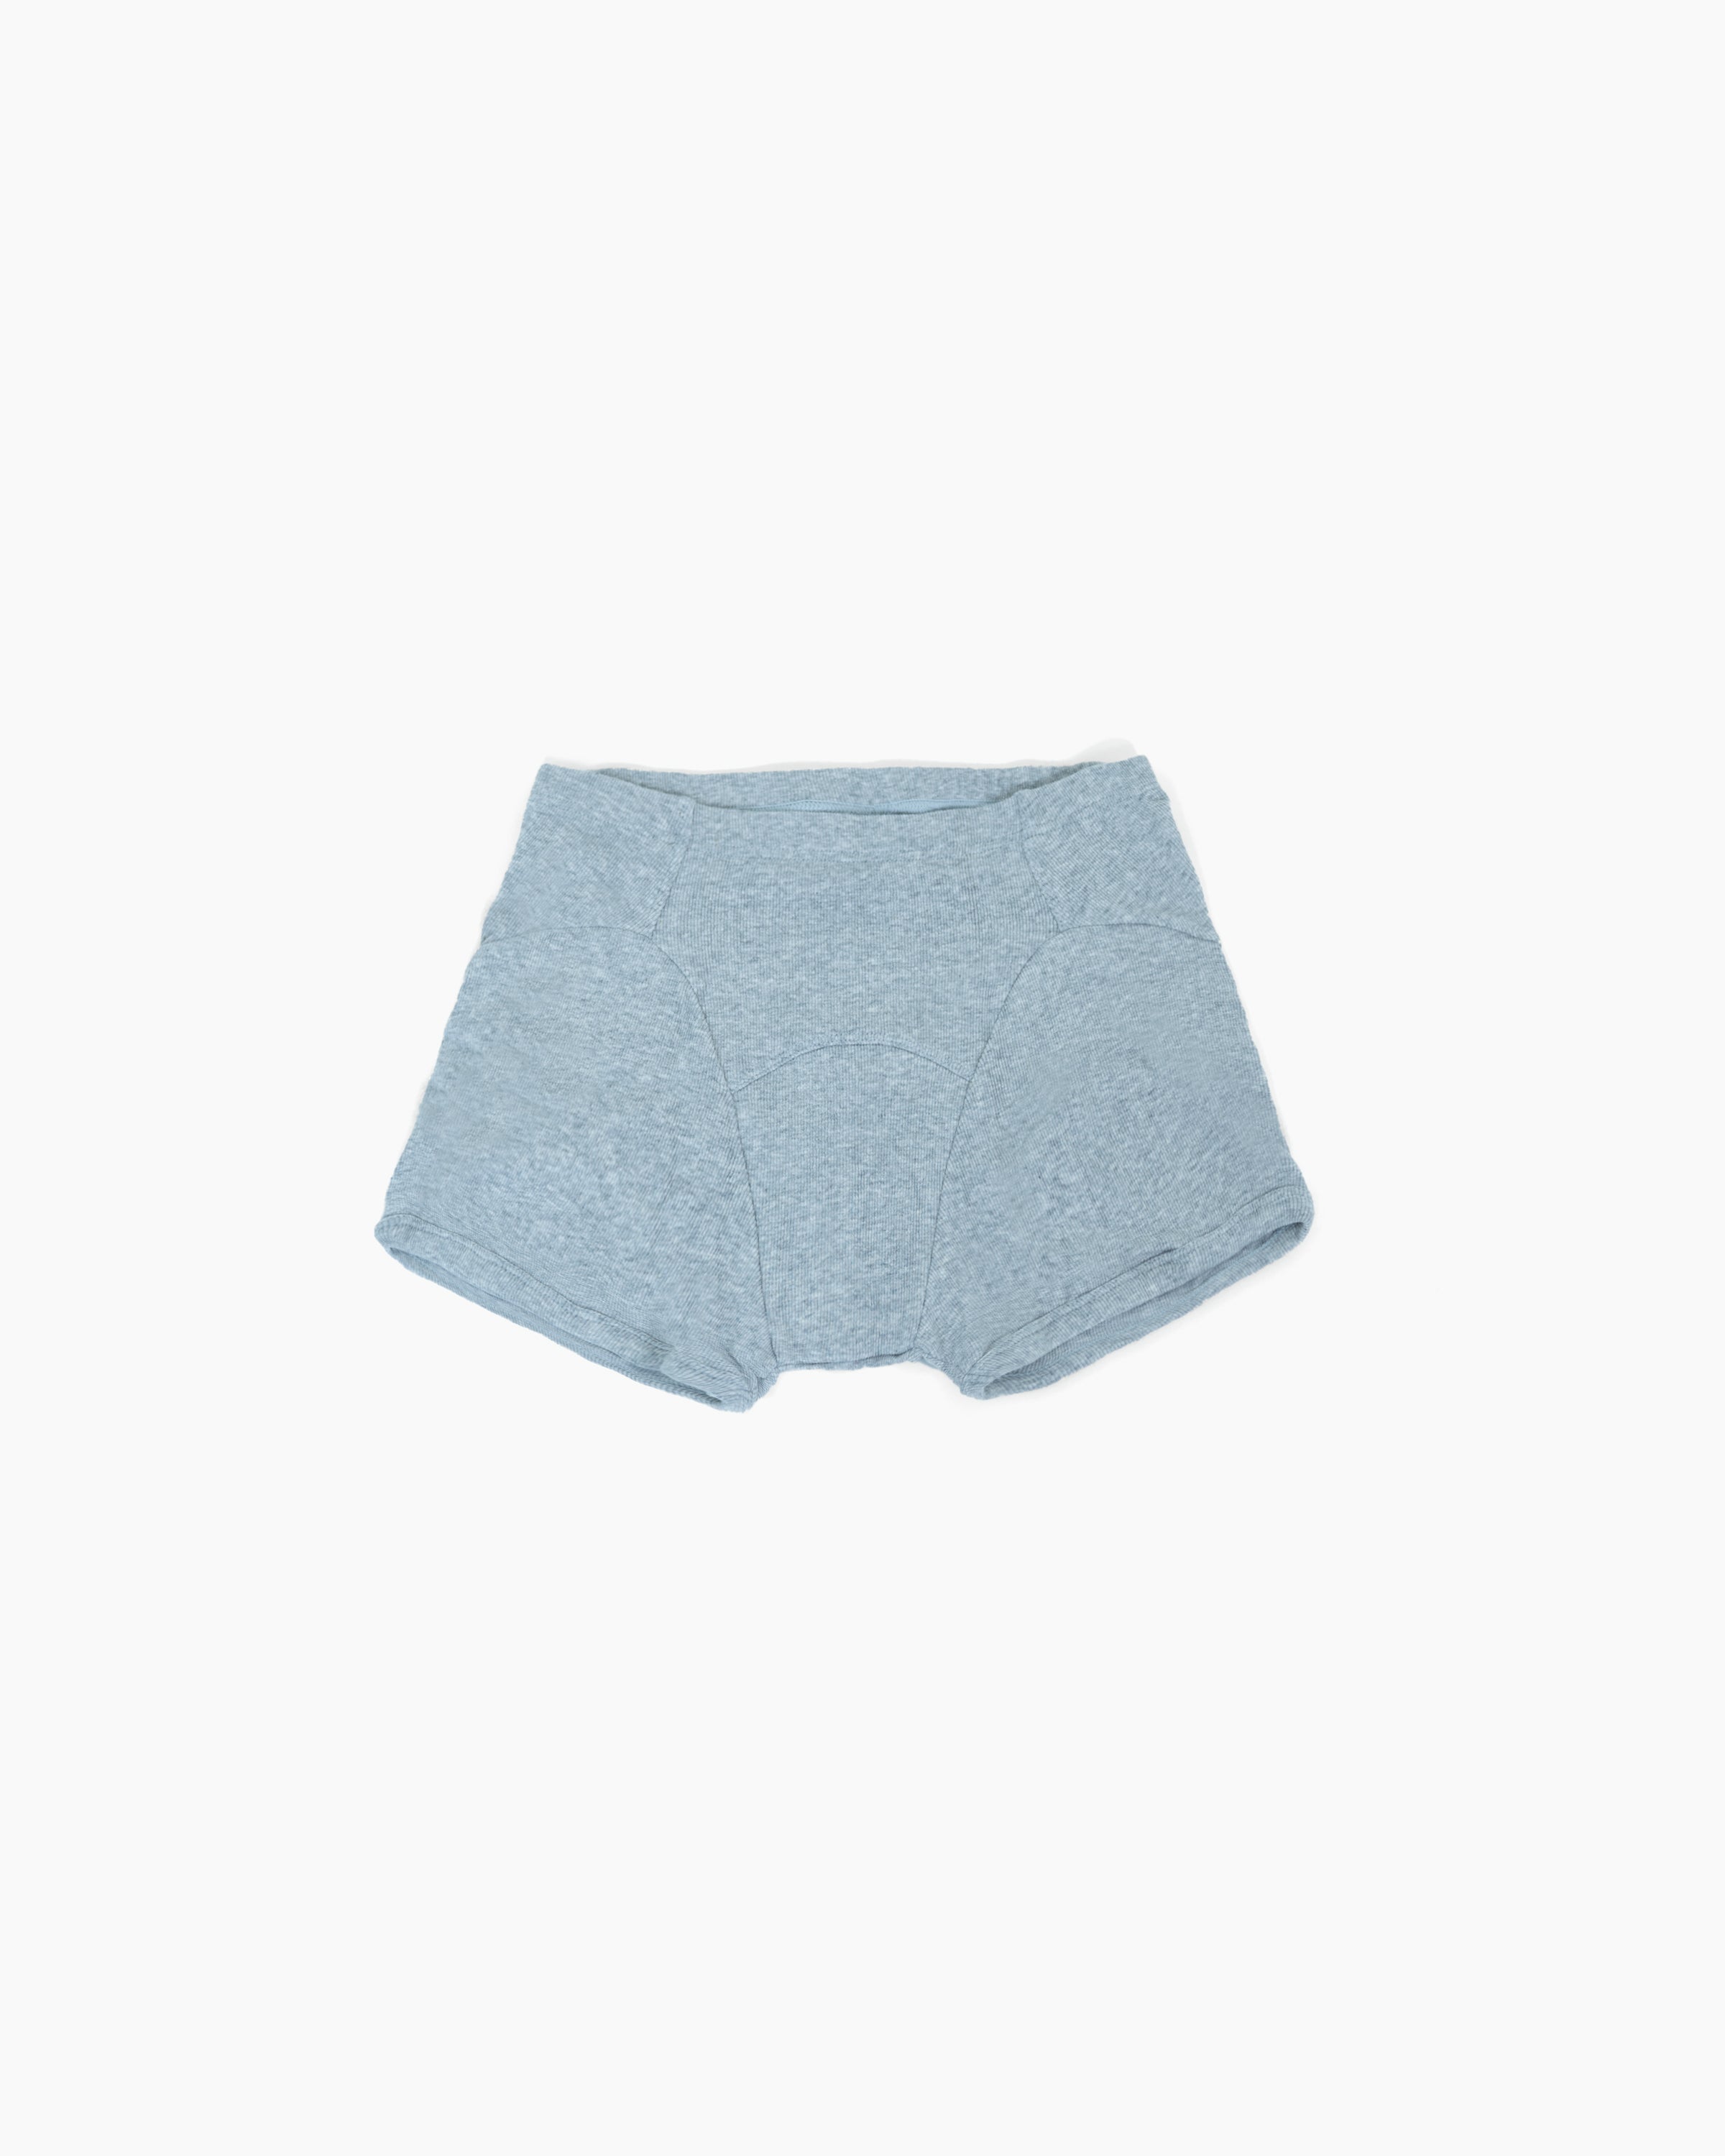 Real McCoy's Athletic Underwear Short MA17111 | Gray